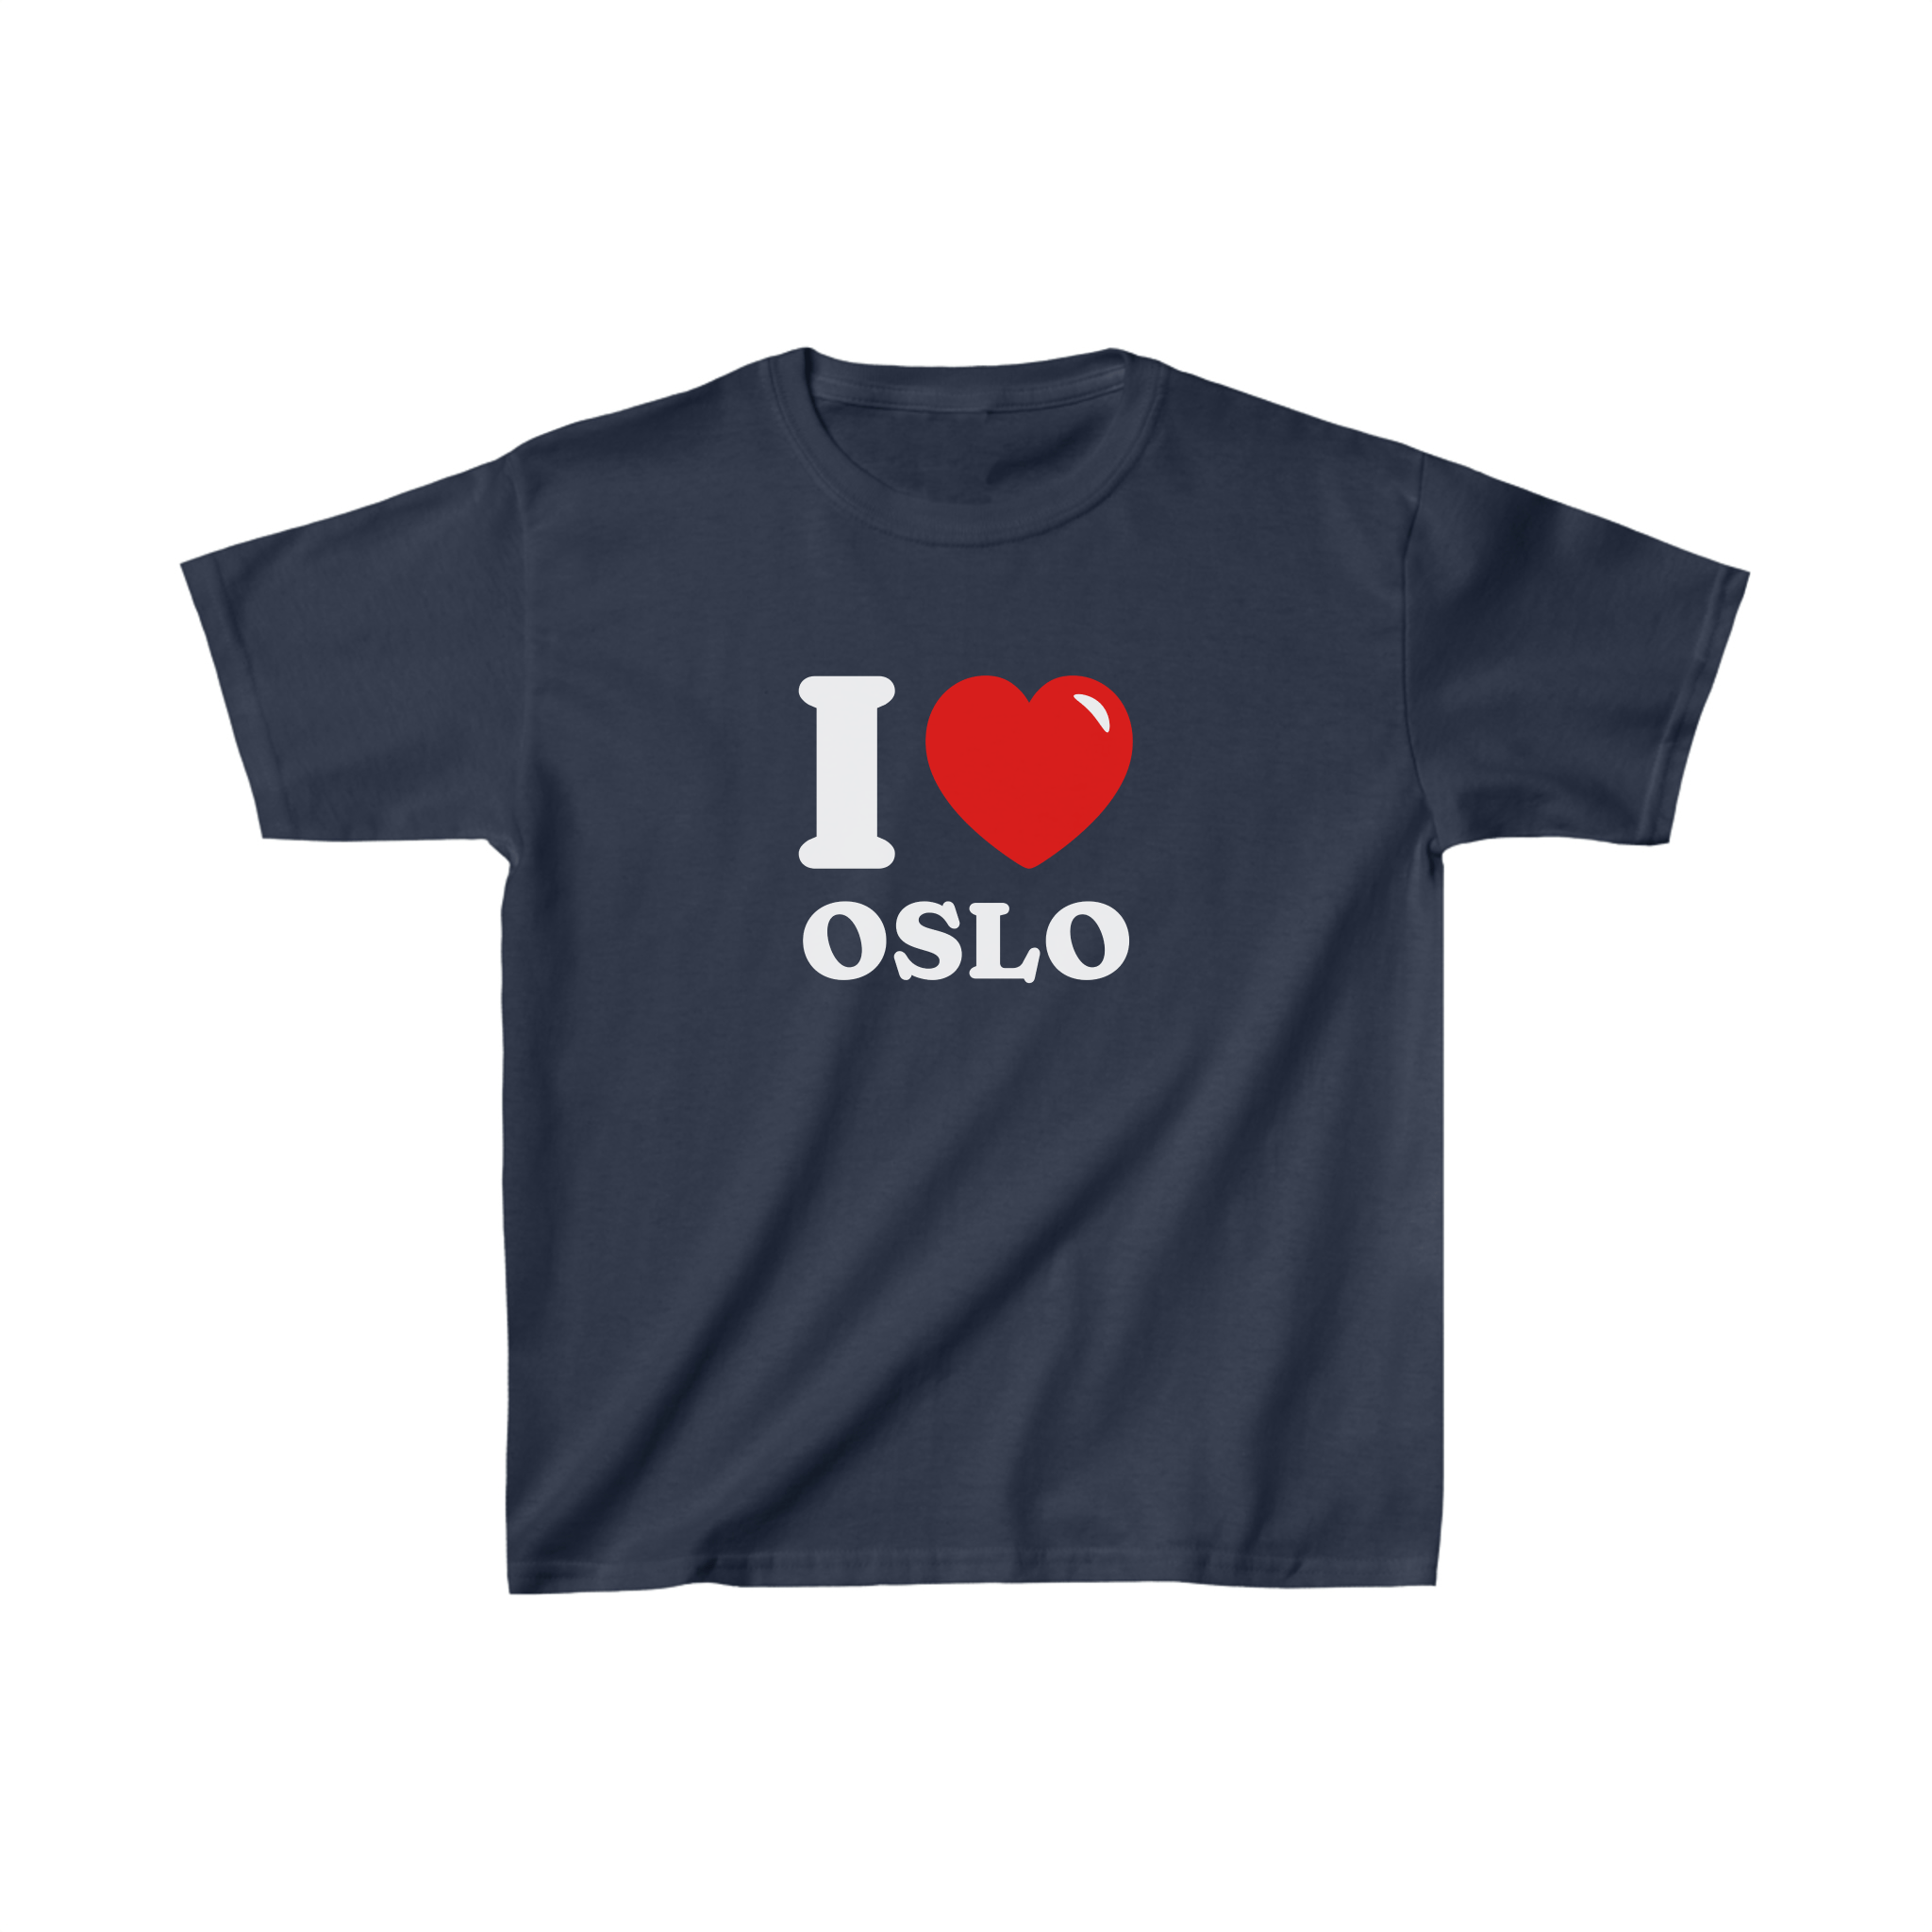 'I love Oslo' baby tee - In Print We Trust